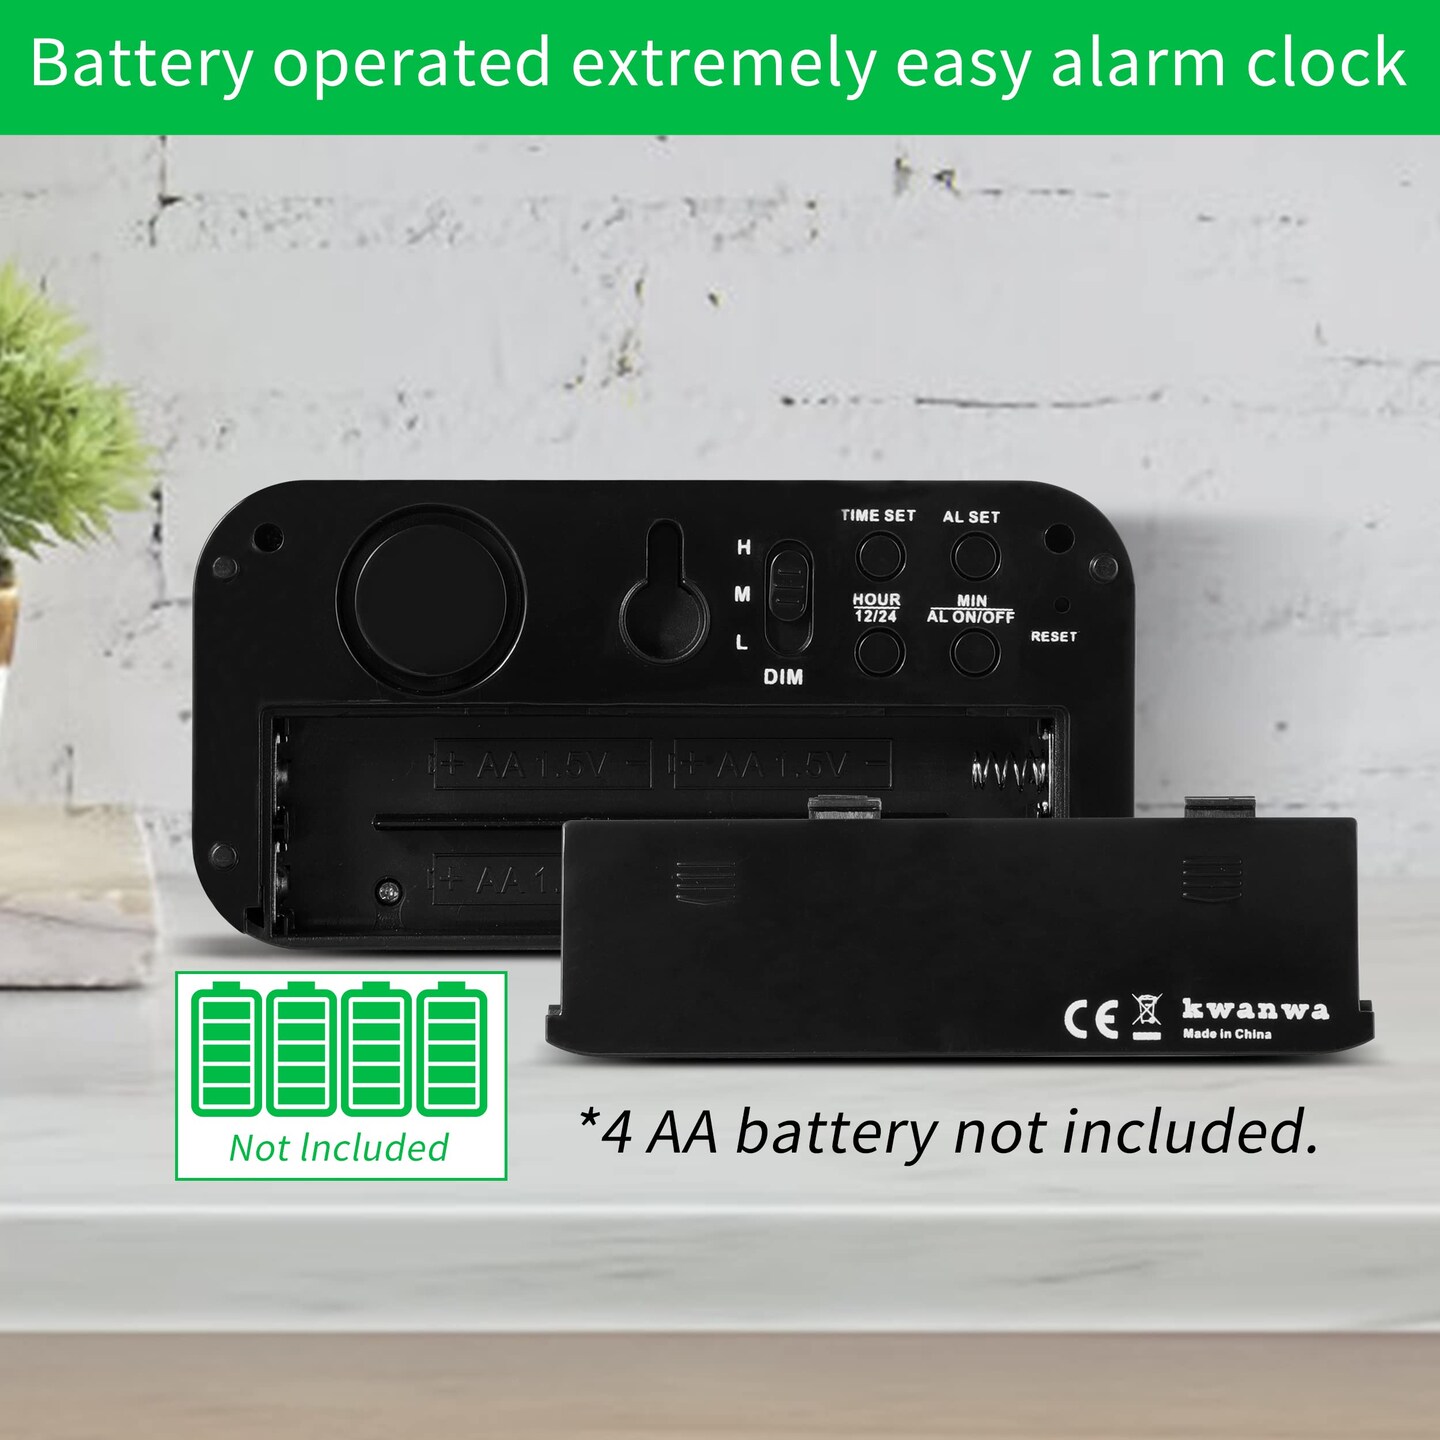 Buy KWANWA Battery Operated Only Cordless LED Electronic Alarm